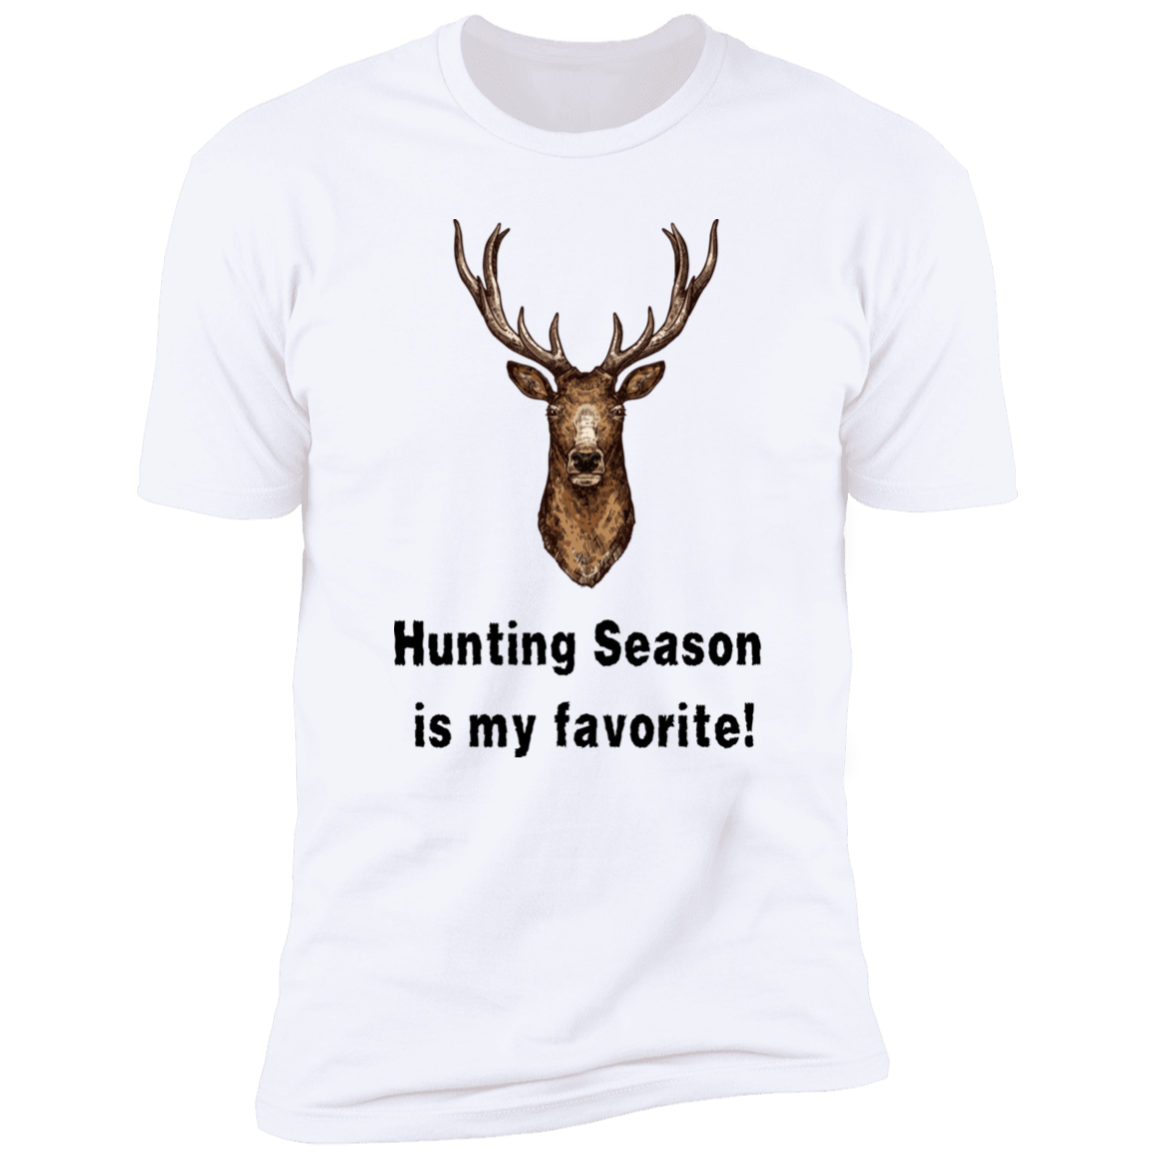 Hunting Season is my favorite! Z61x Premium Short Sleeve Tee (Closeout)